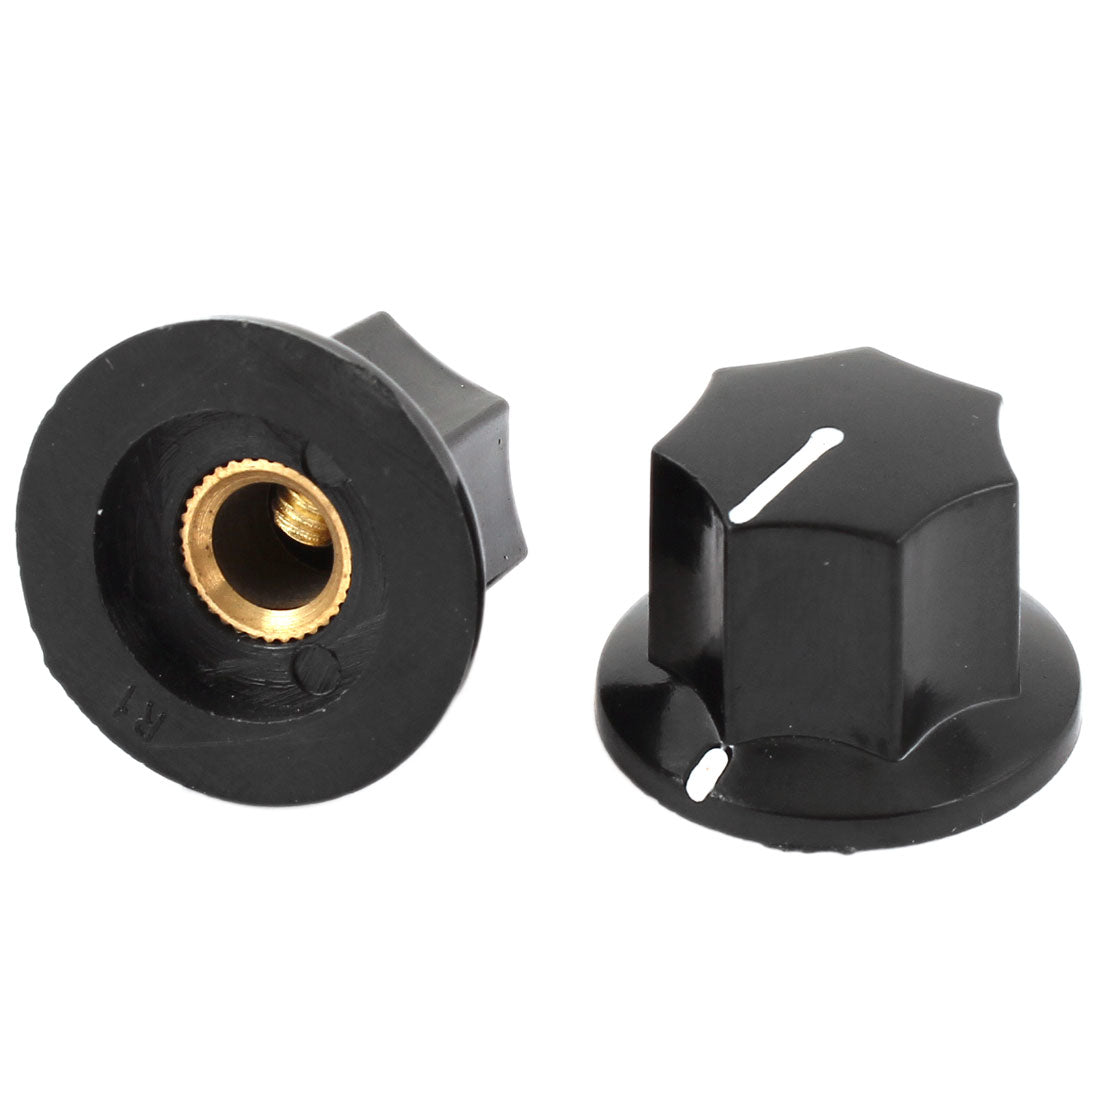 Uxcell Uxcell 2pcs 6mm Insert Diameter Shaft Plastic Potentiometer Rotary Knob Pots Black